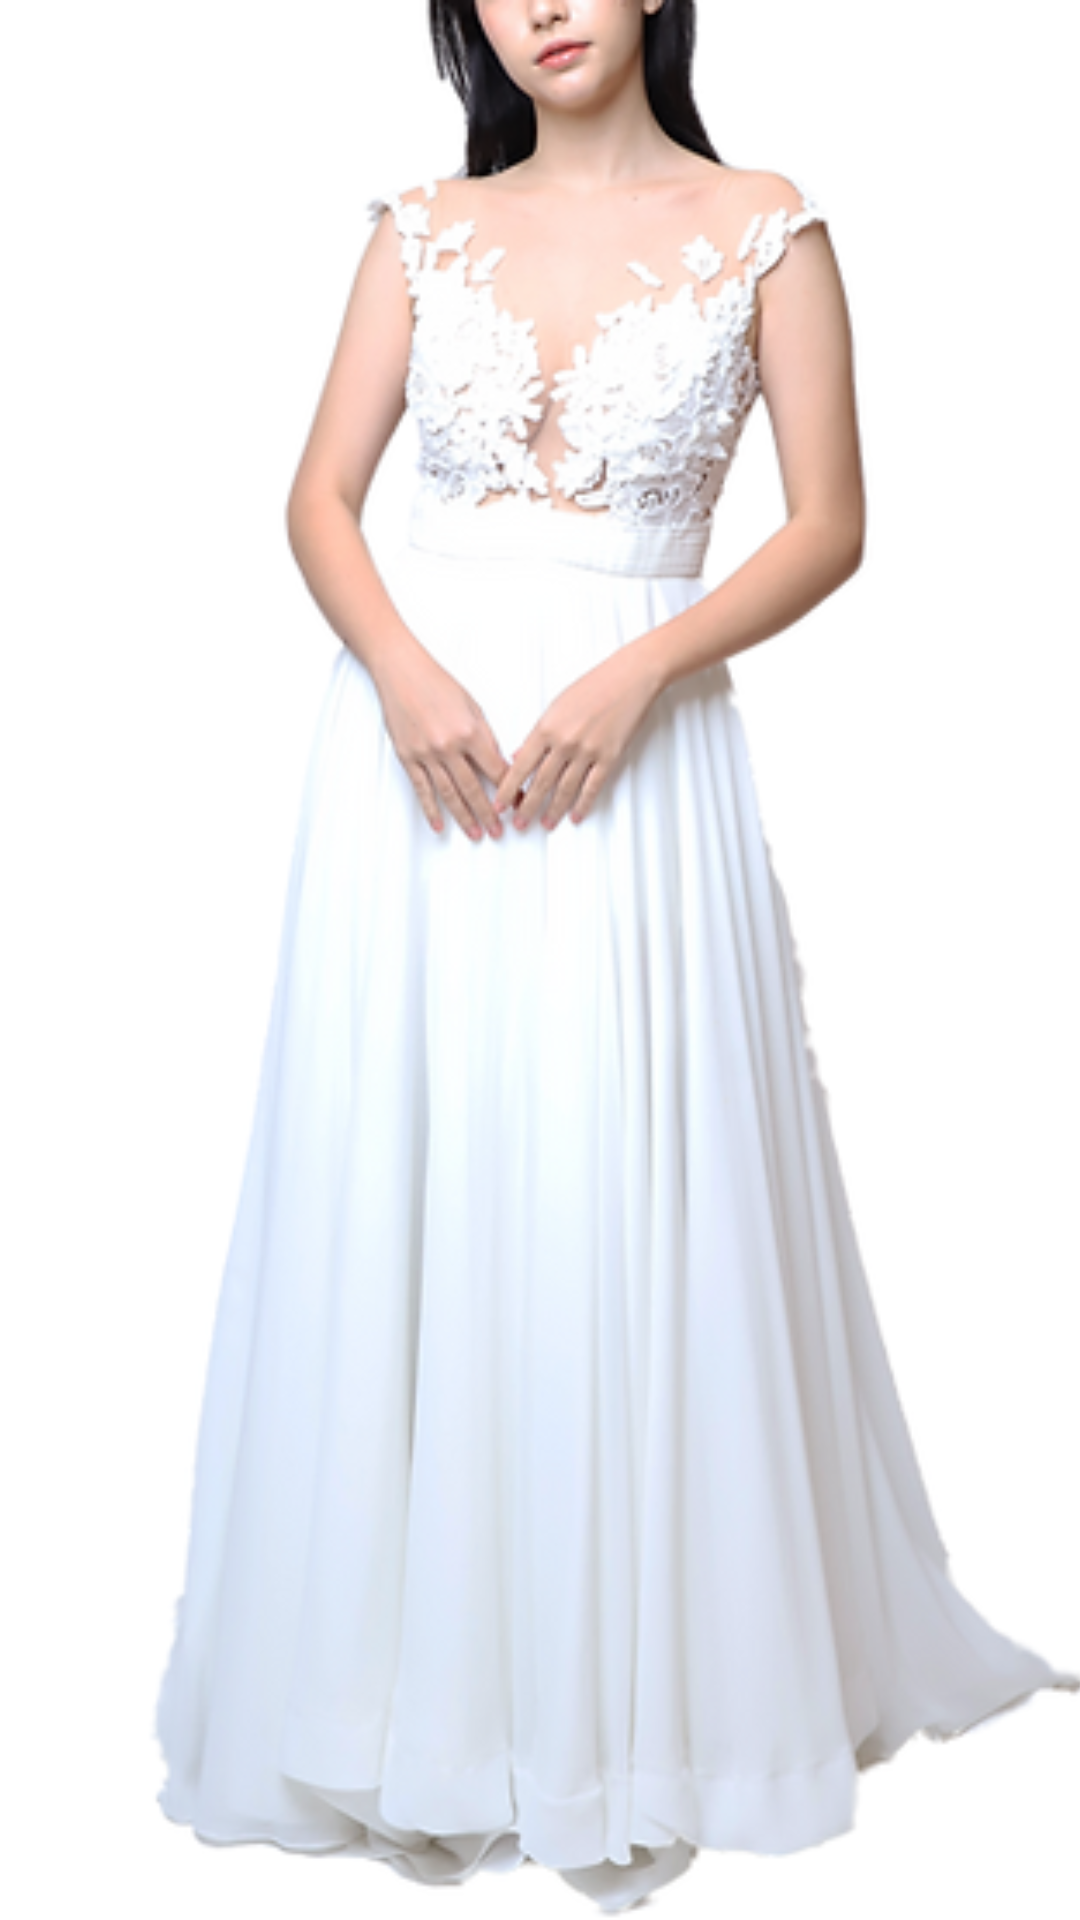 Milla Monika Lace Applique Gown in White